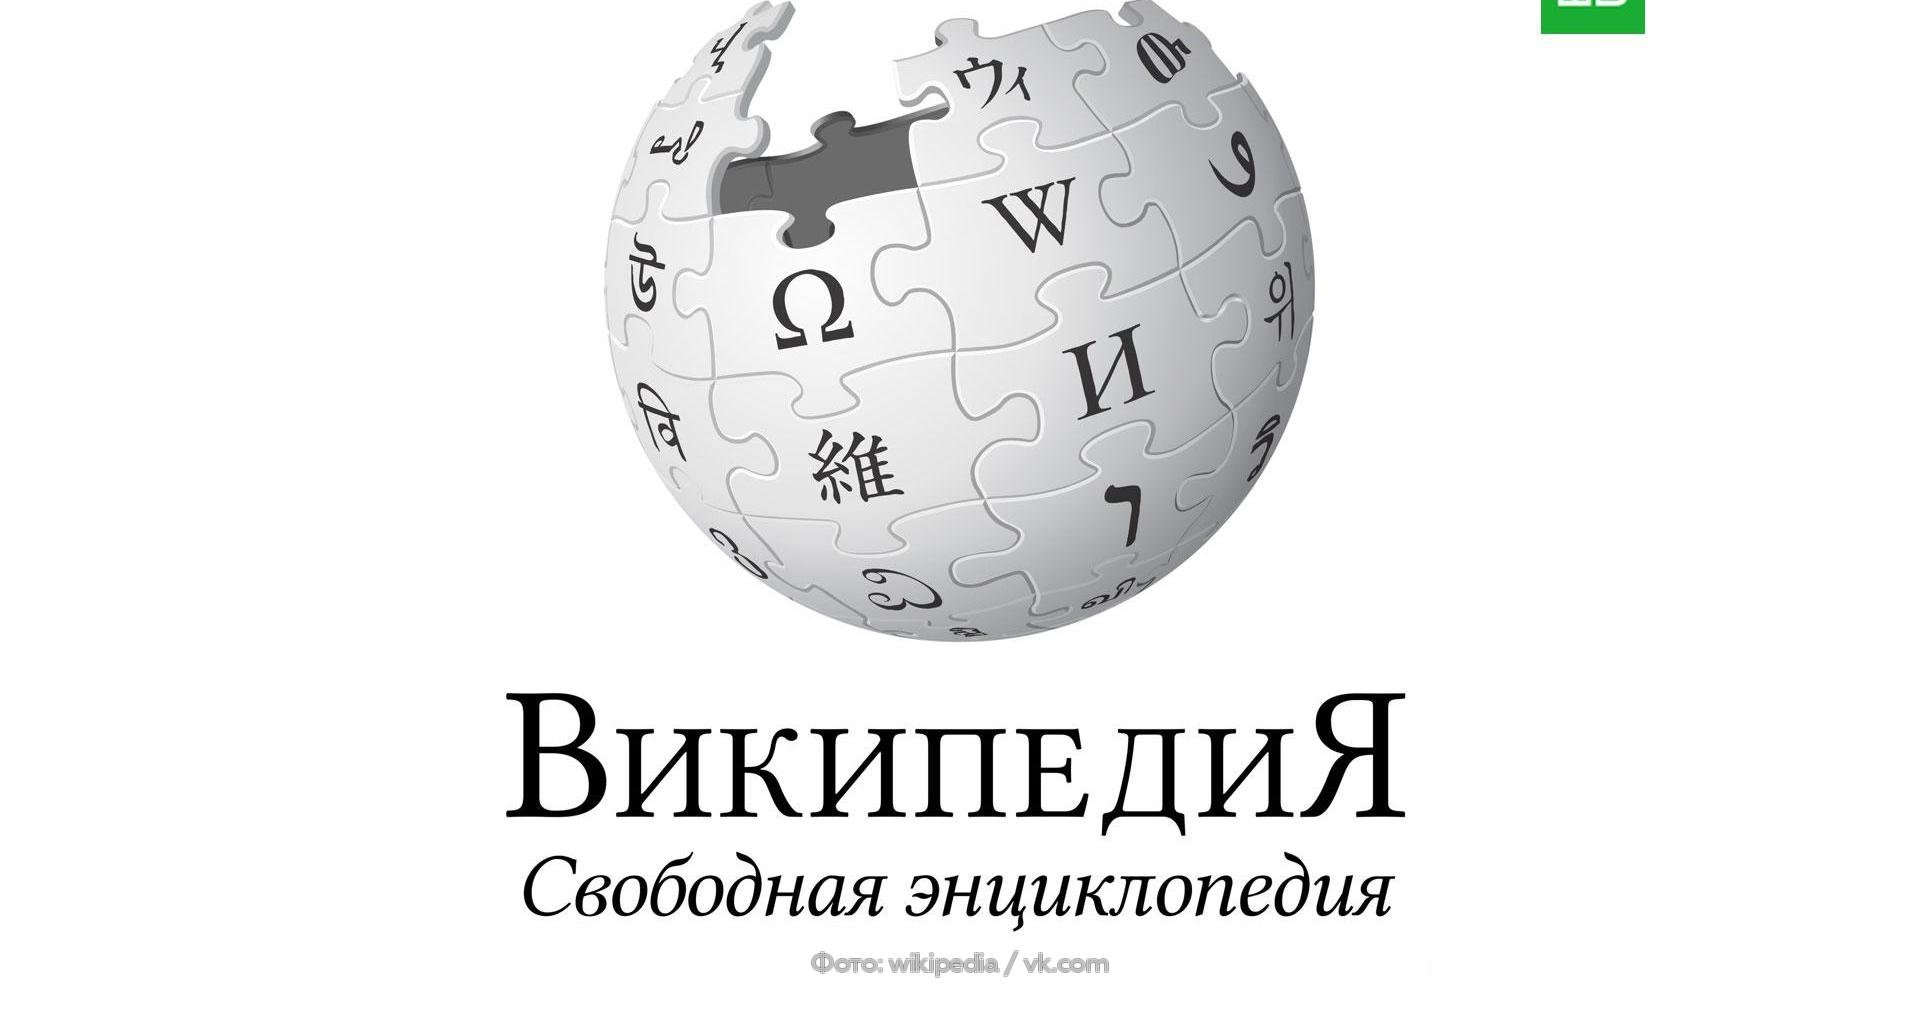 Википедия лого. Wikipedia фото. Википедия логотип картинка. Википедия картинки. Https ru wikipedia org w